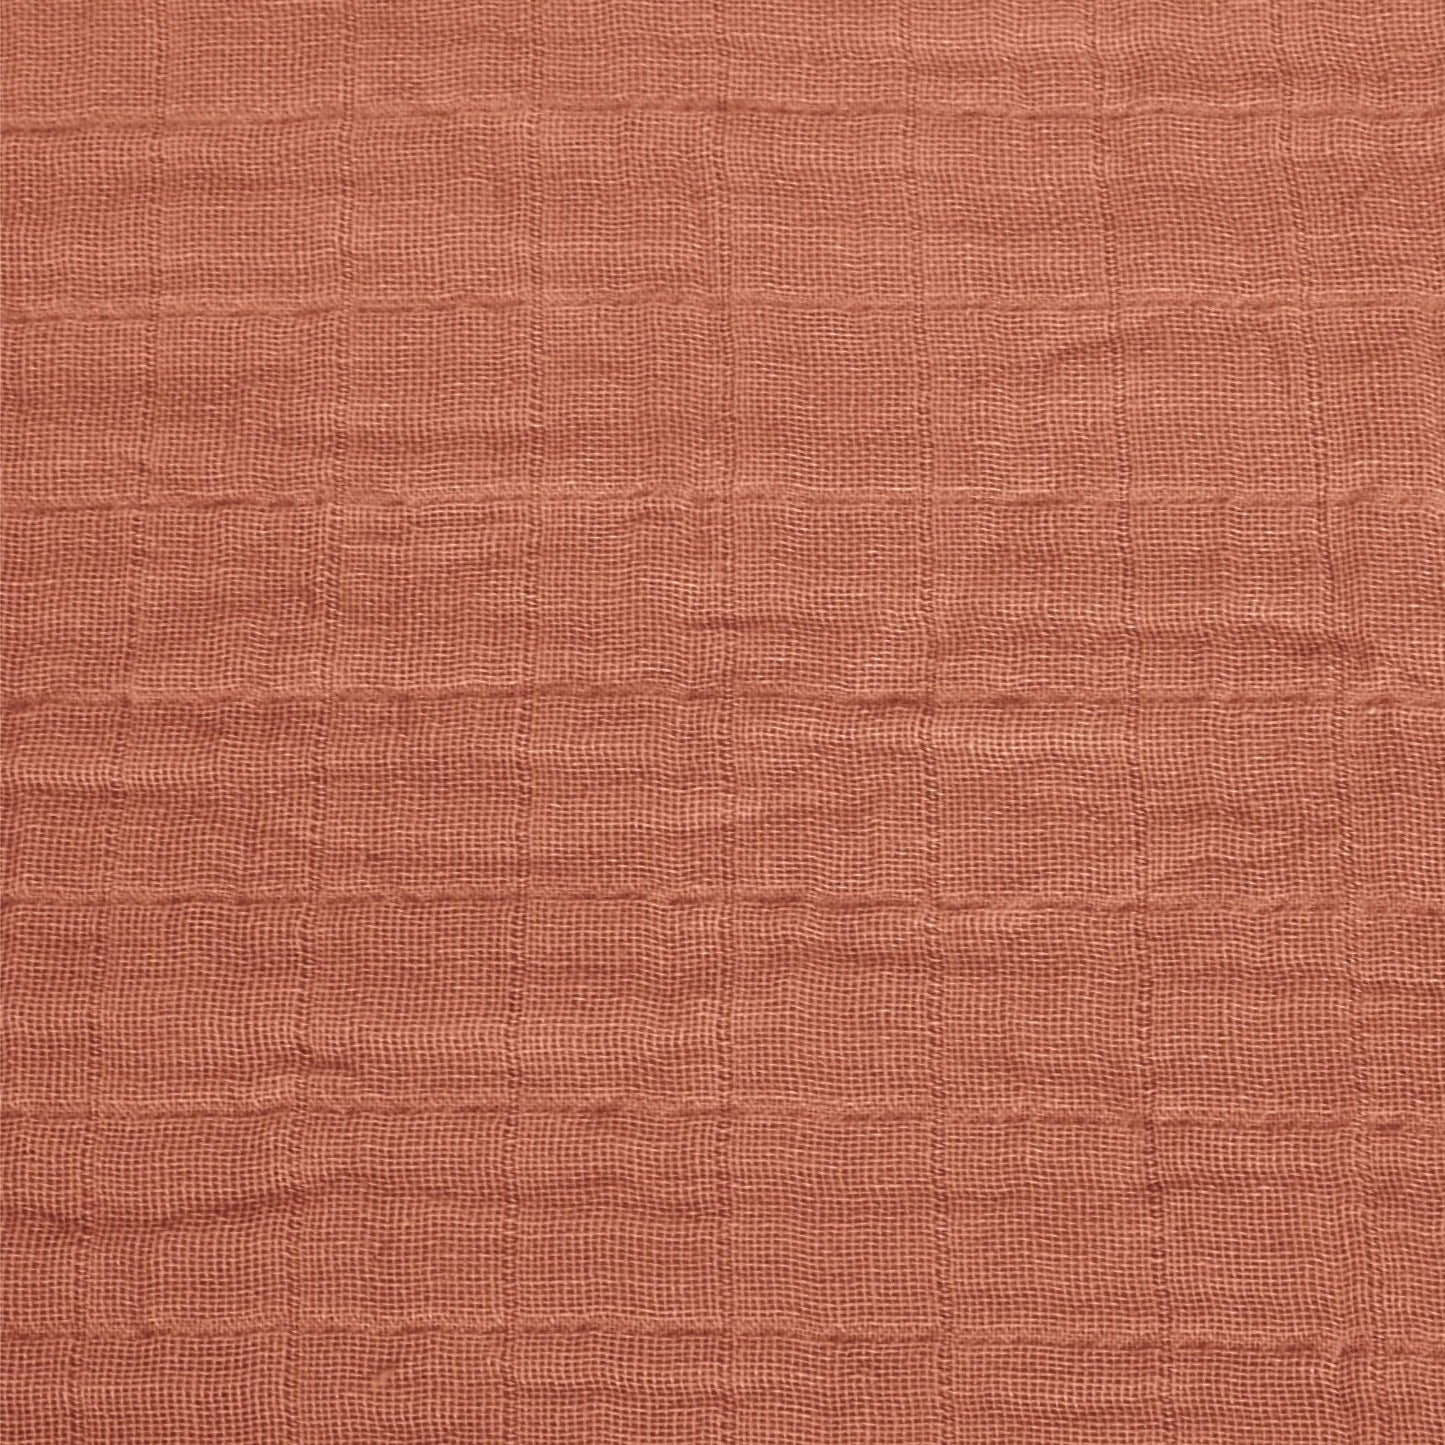 Cotton muslin change pad cover - cinnamon